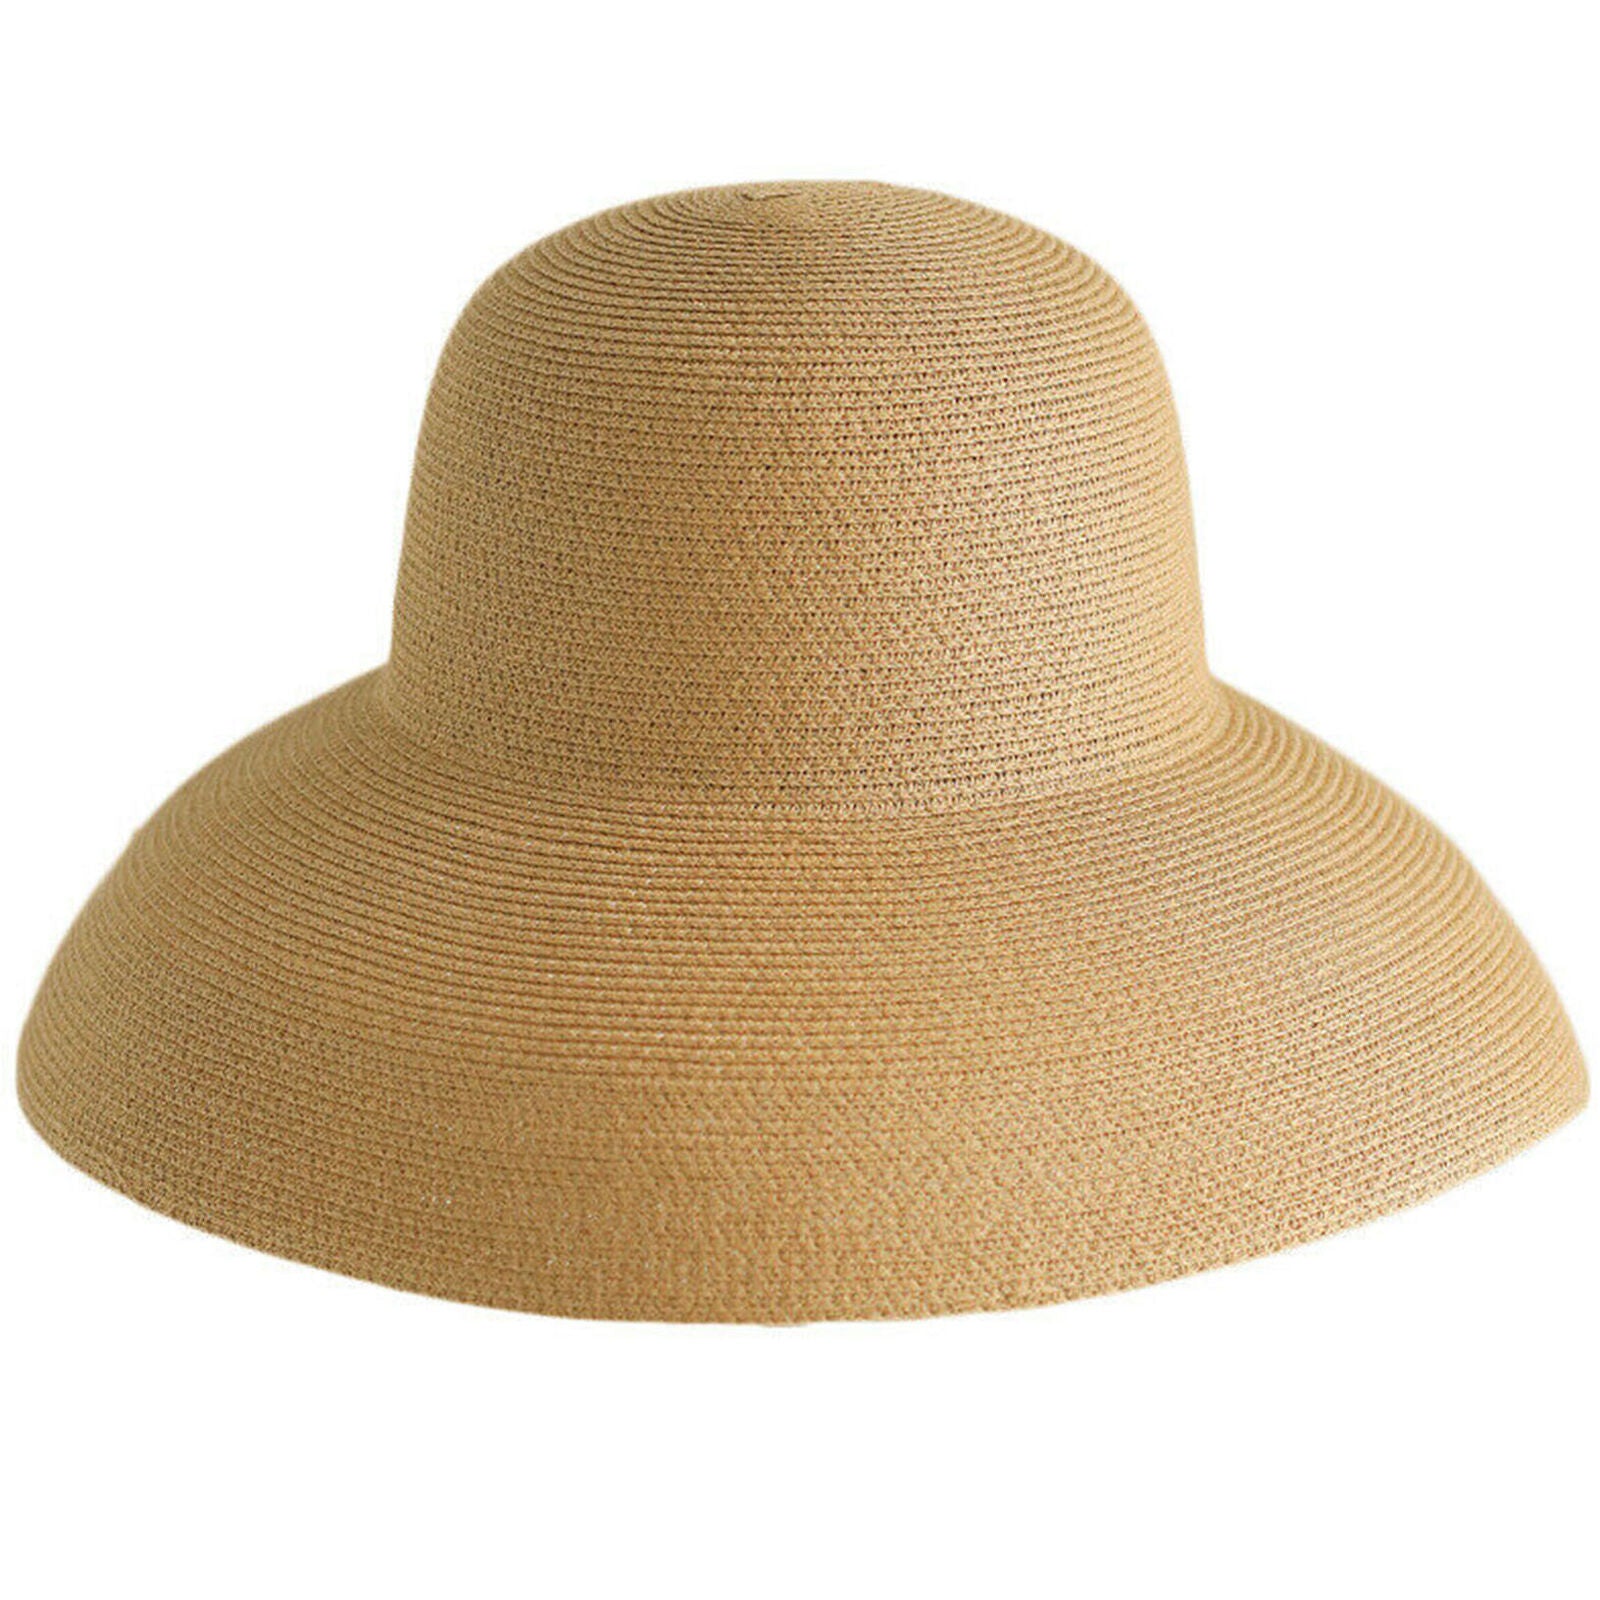 Ladies Women's Summer Large Floppy Folding Wide Brim Cap Sun Straw Beach Hat New